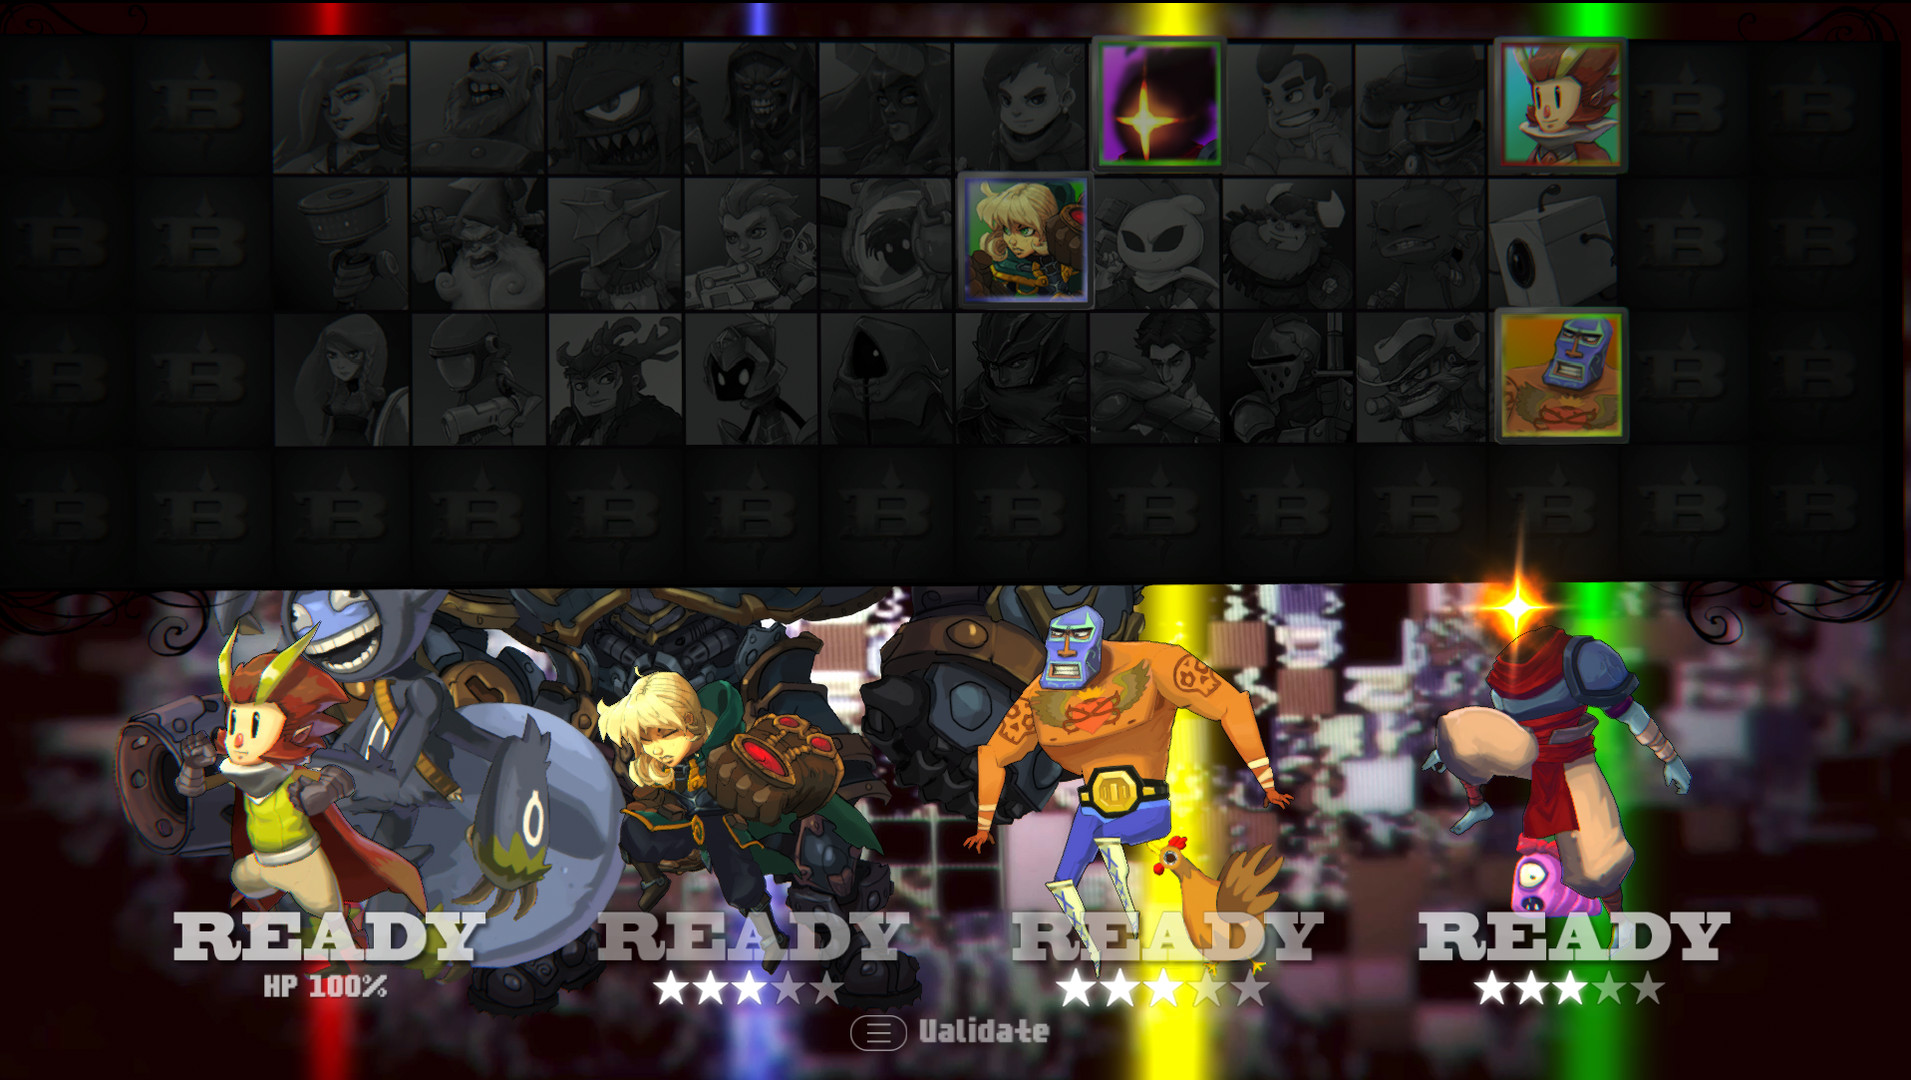 Screenshot: game-images/Bounty_Battle_screenshots_249712.jpg